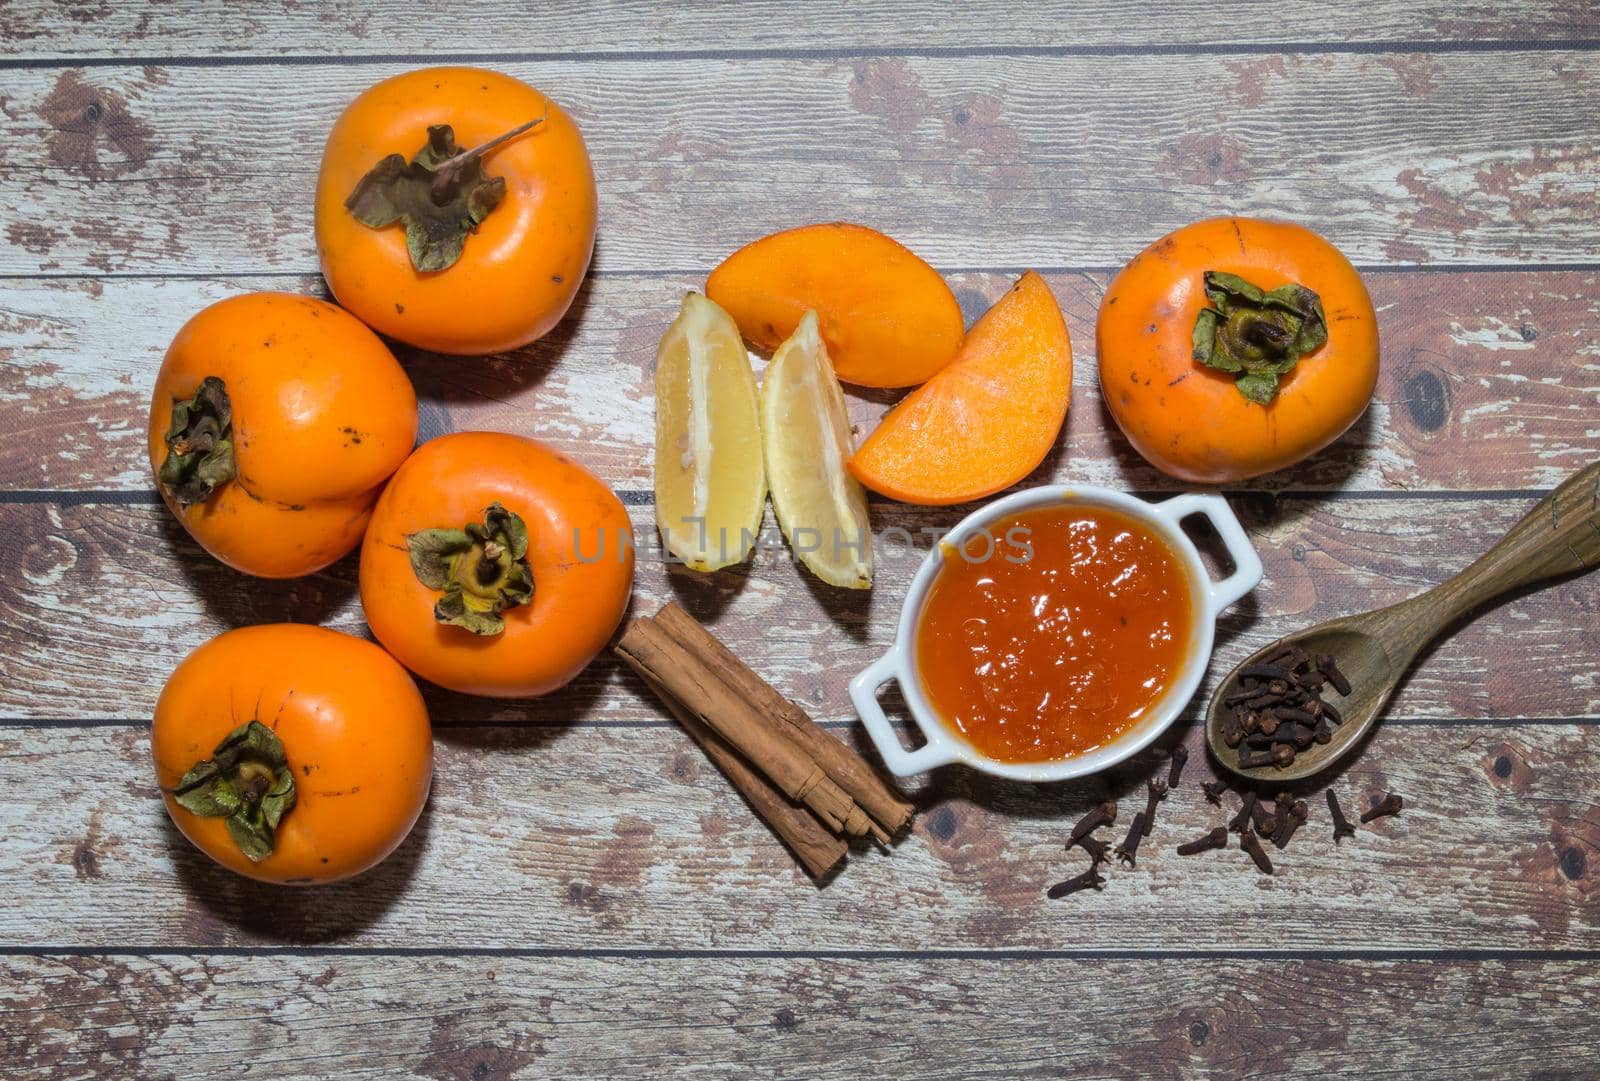 organic and fresh persimmon fruits to prepare jams by GabrielaBertolini